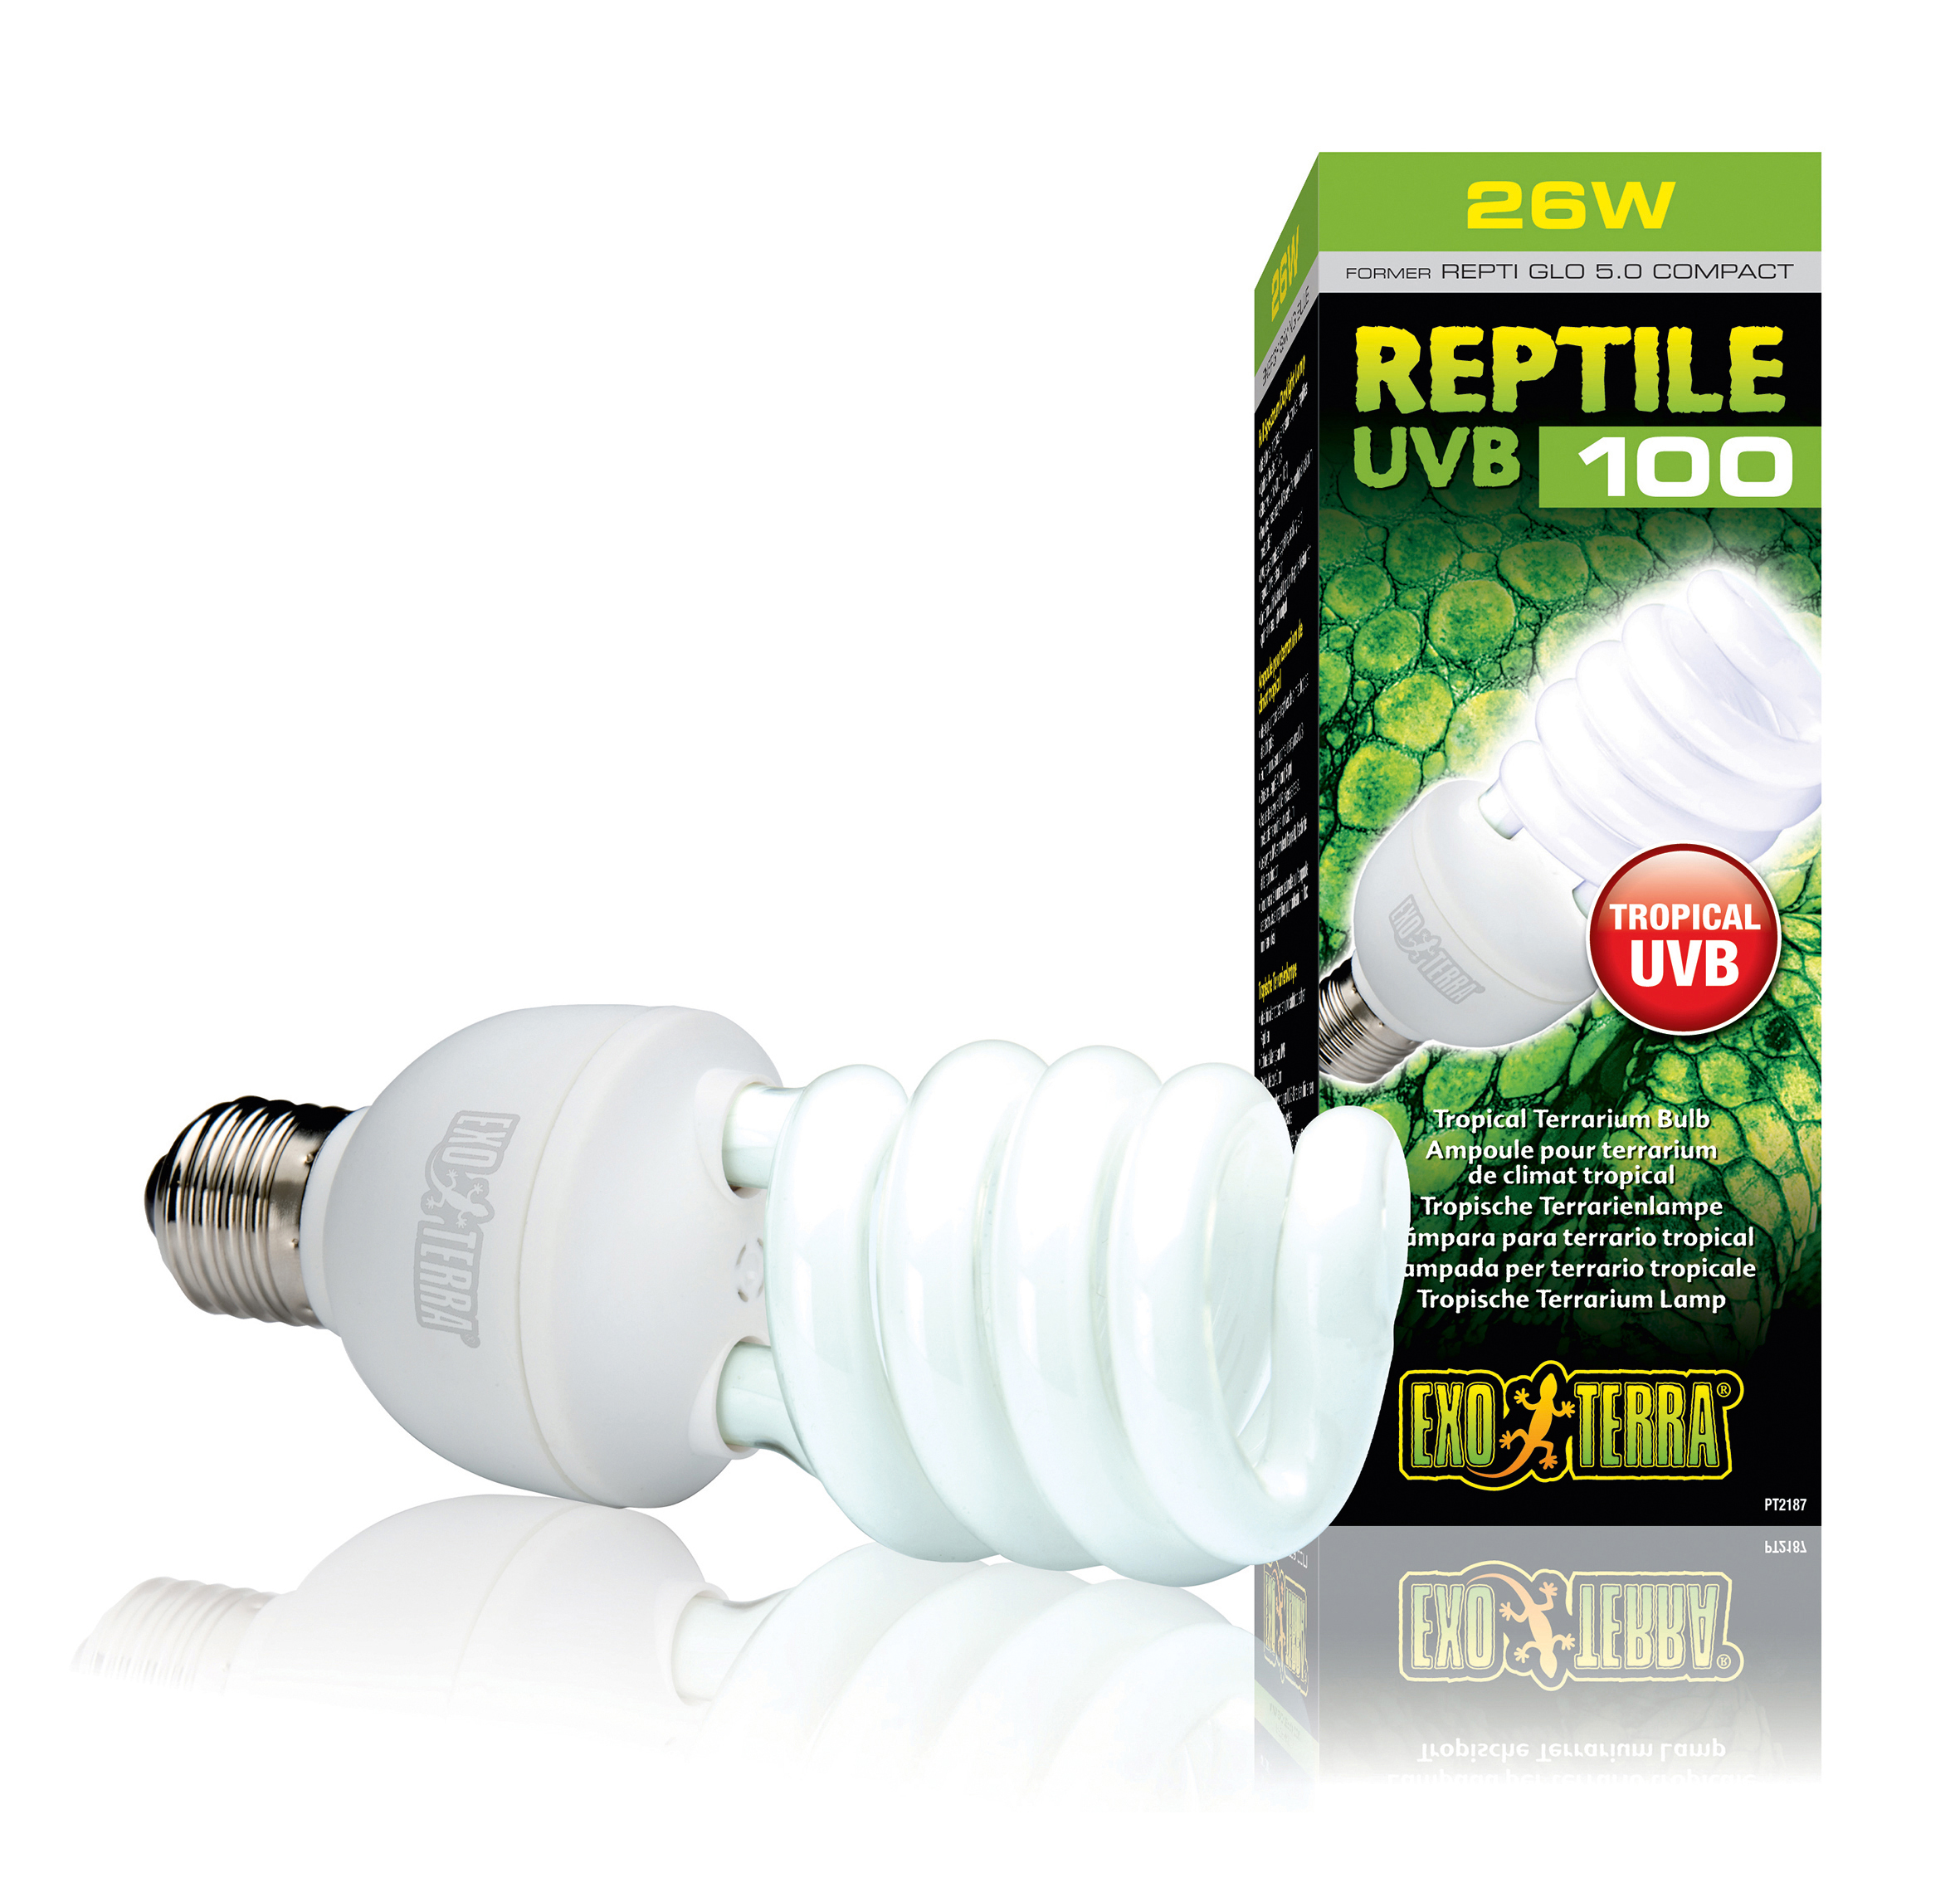 Ex reptile uvb100 tropical lamp - <Product shot>